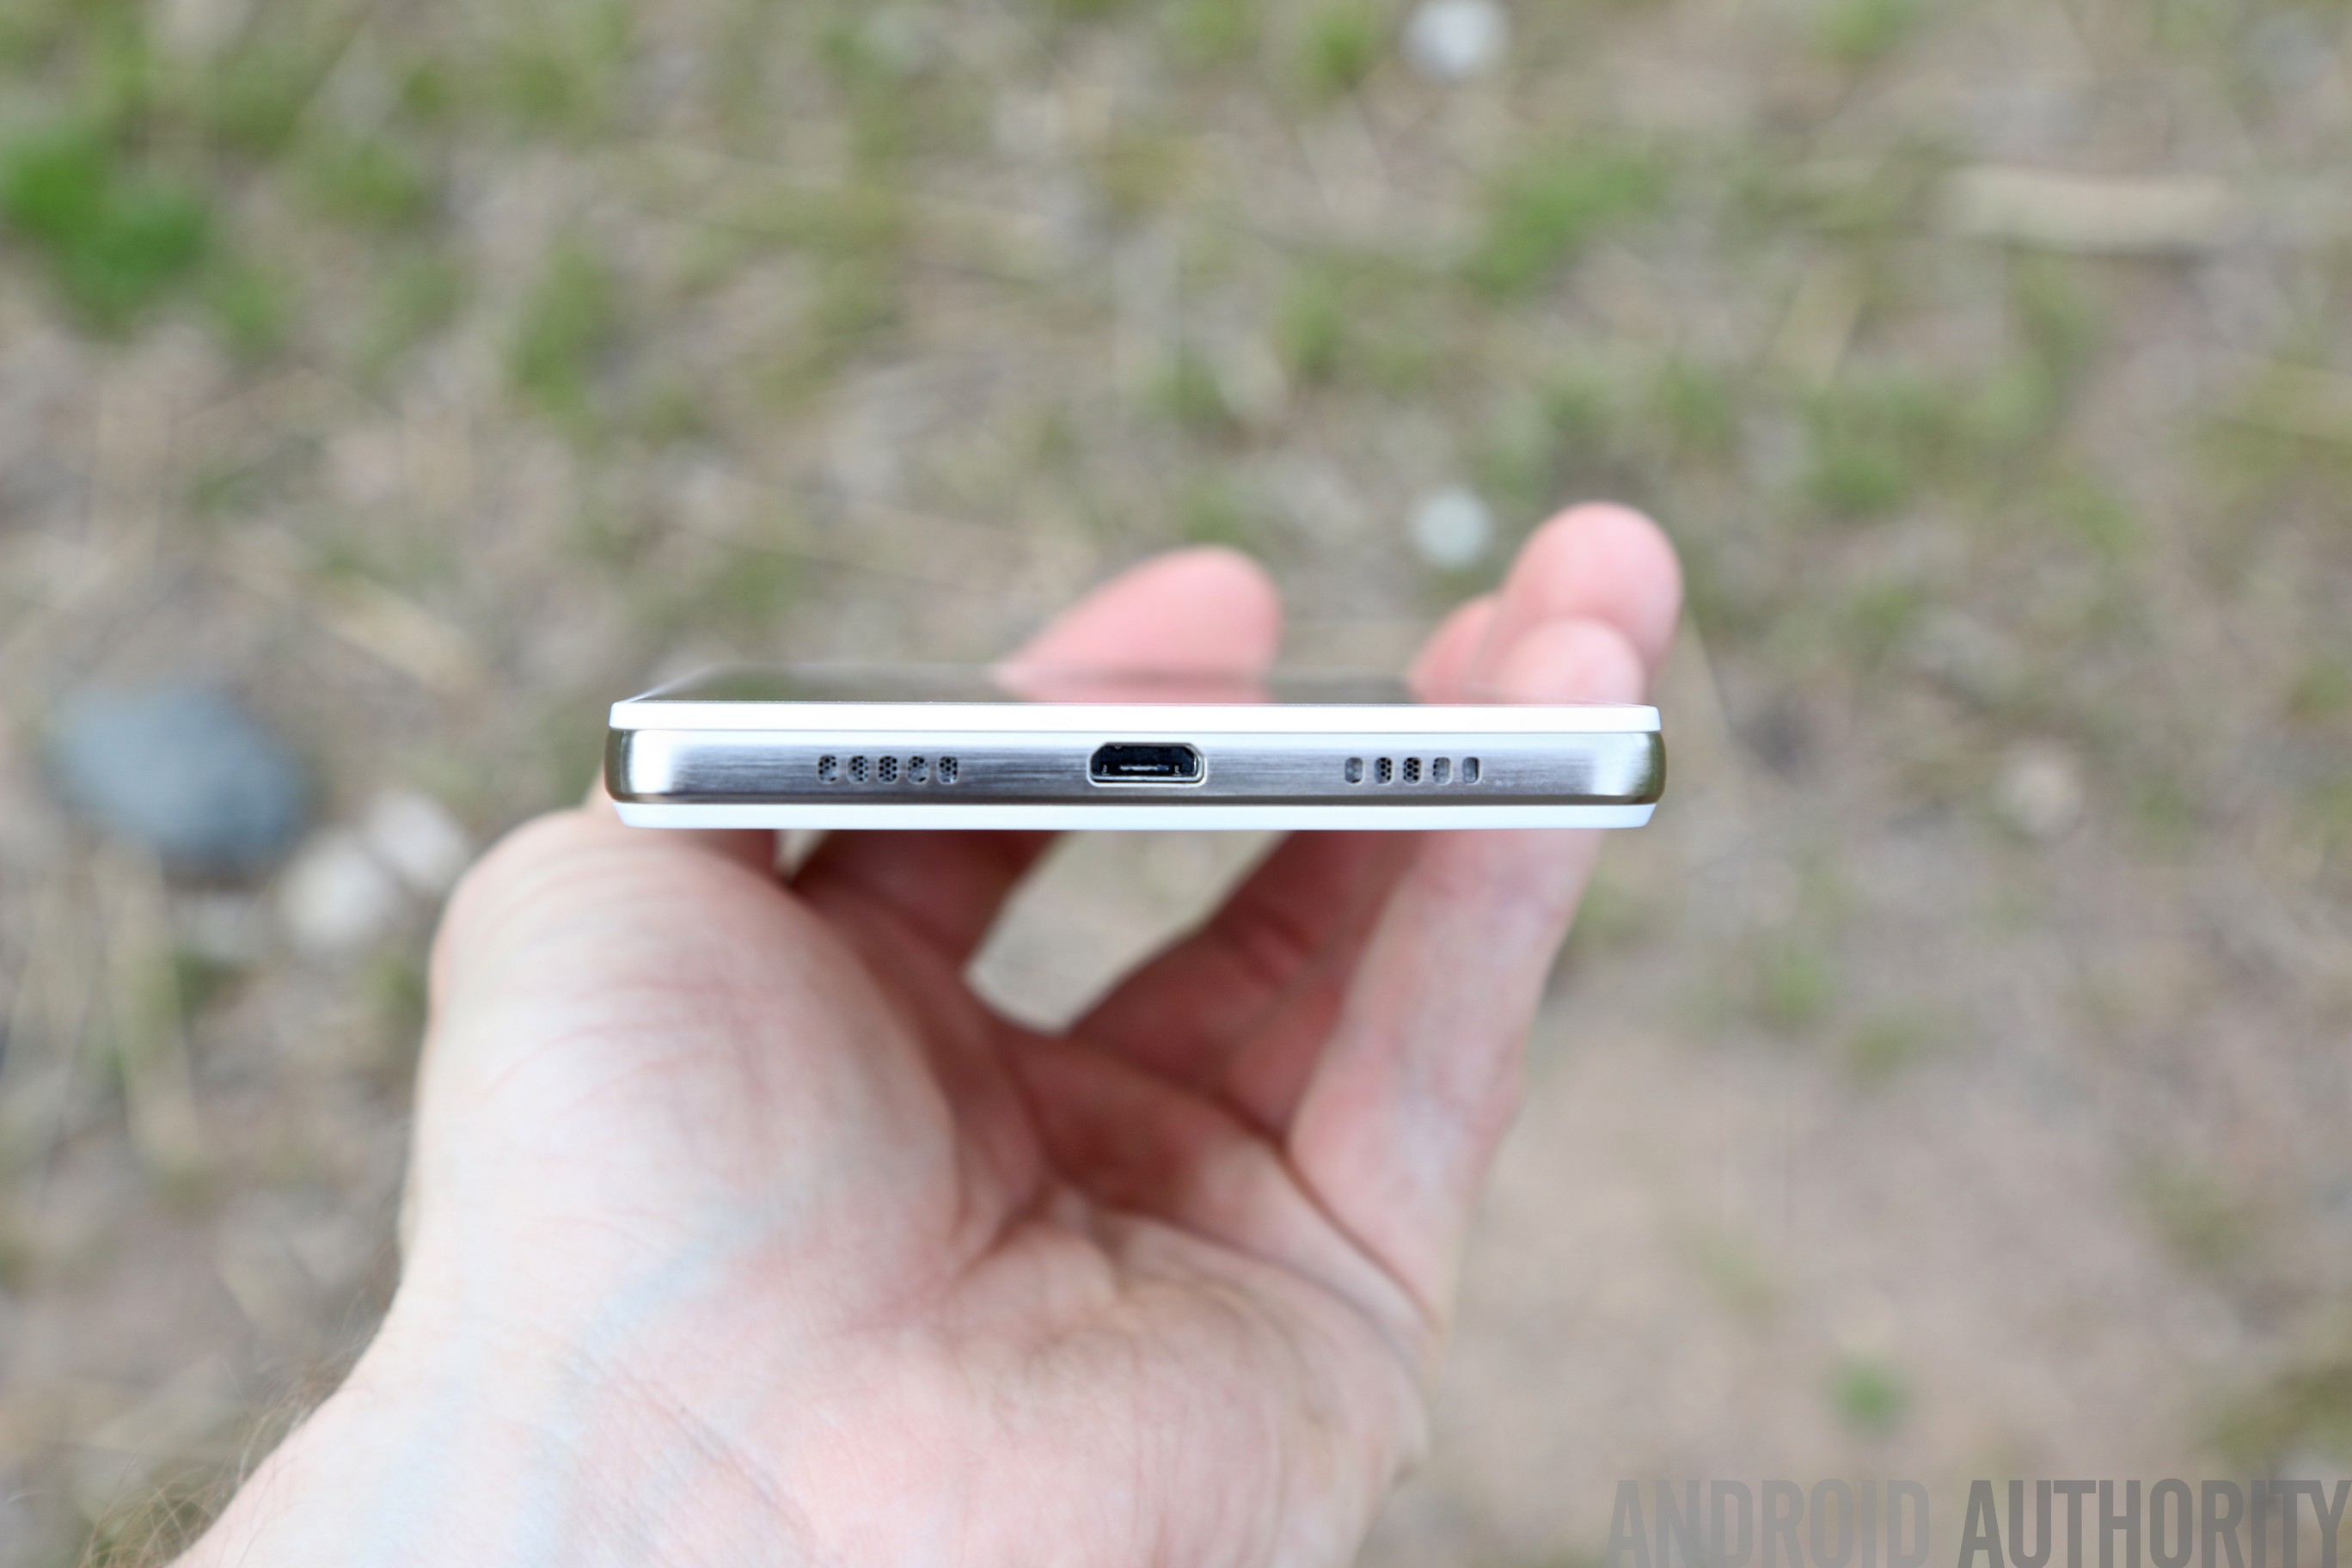 Huawei-P8-Lite-review-9